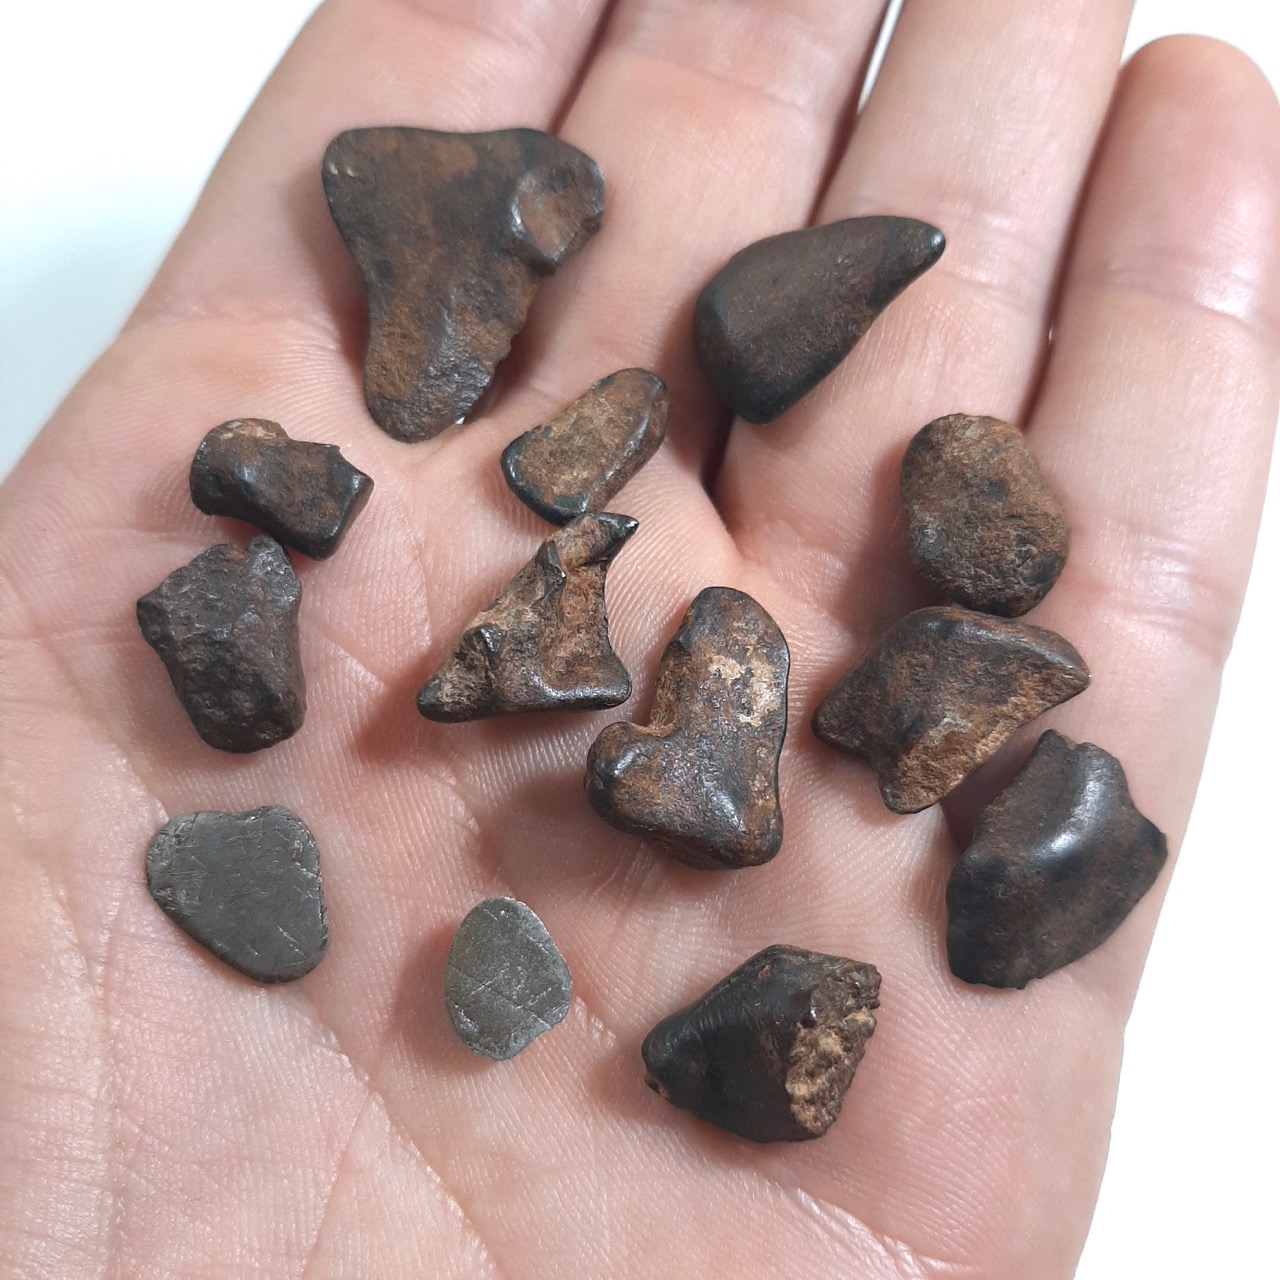 Taza meteorite. NWA 859, small individuals, 1 slice, 1 endcut.